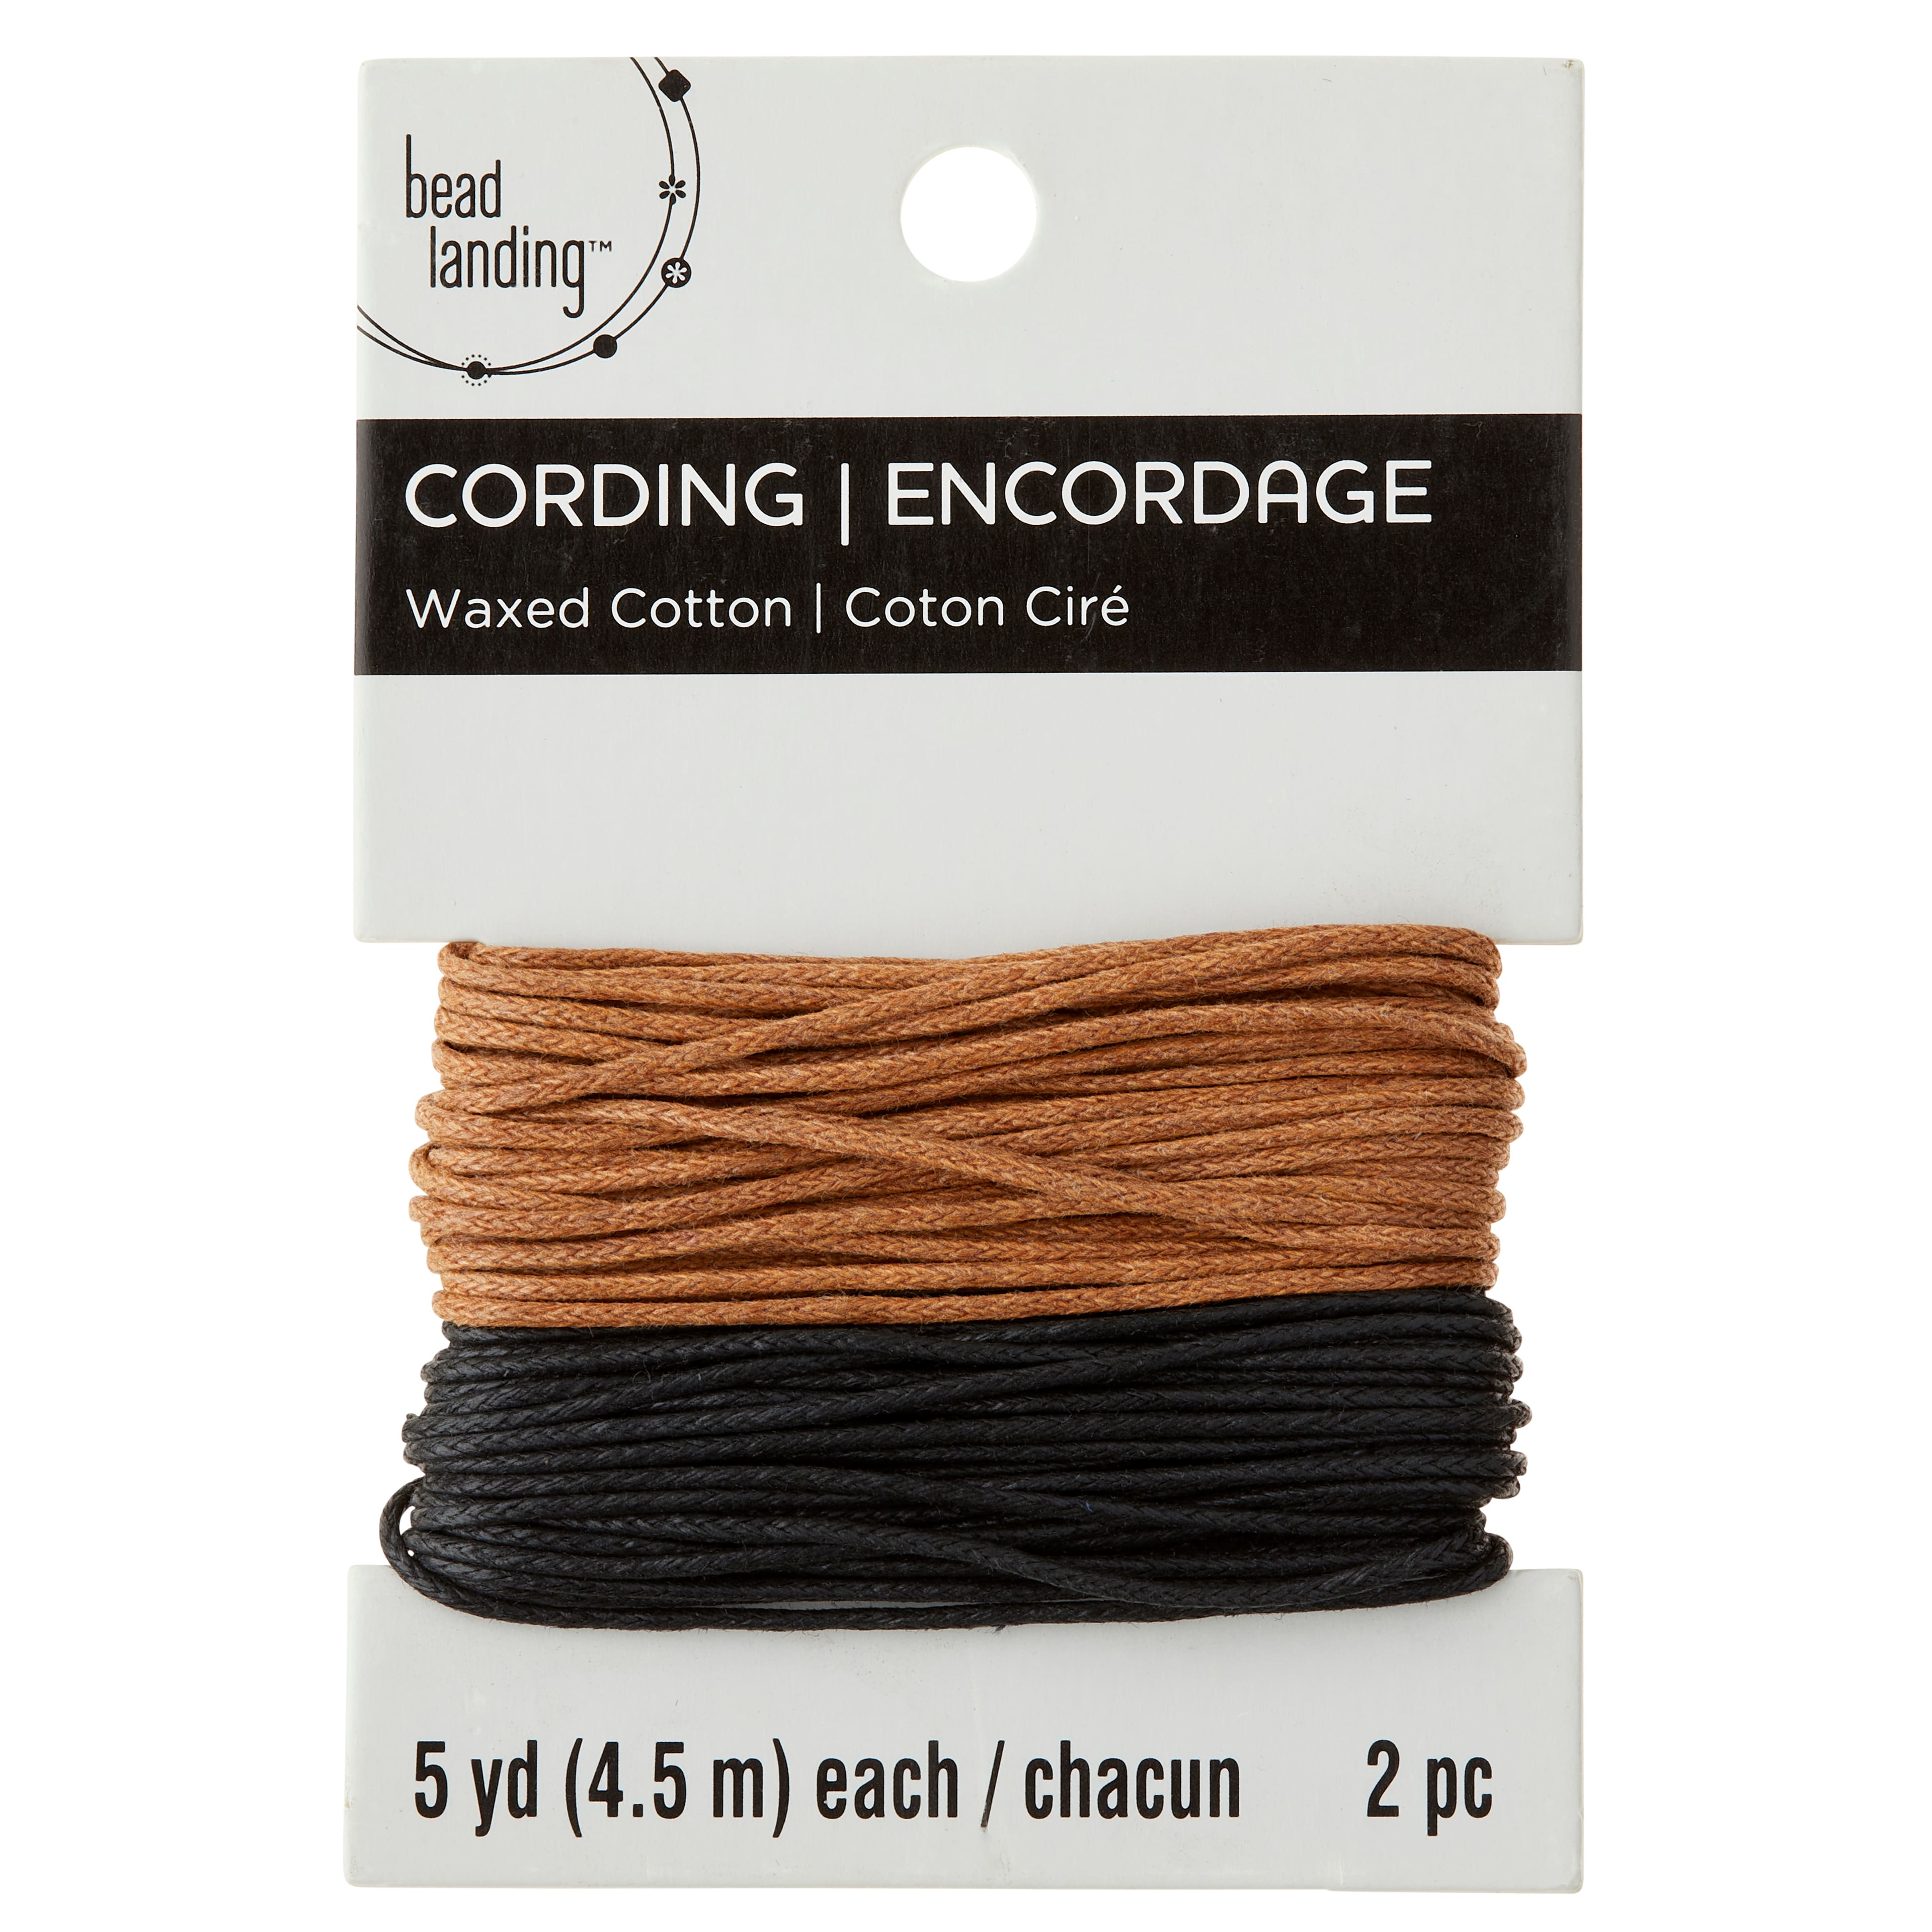 Black &#x26; Brown Waxed Cotton Cording by Bead Landing&#x2122;